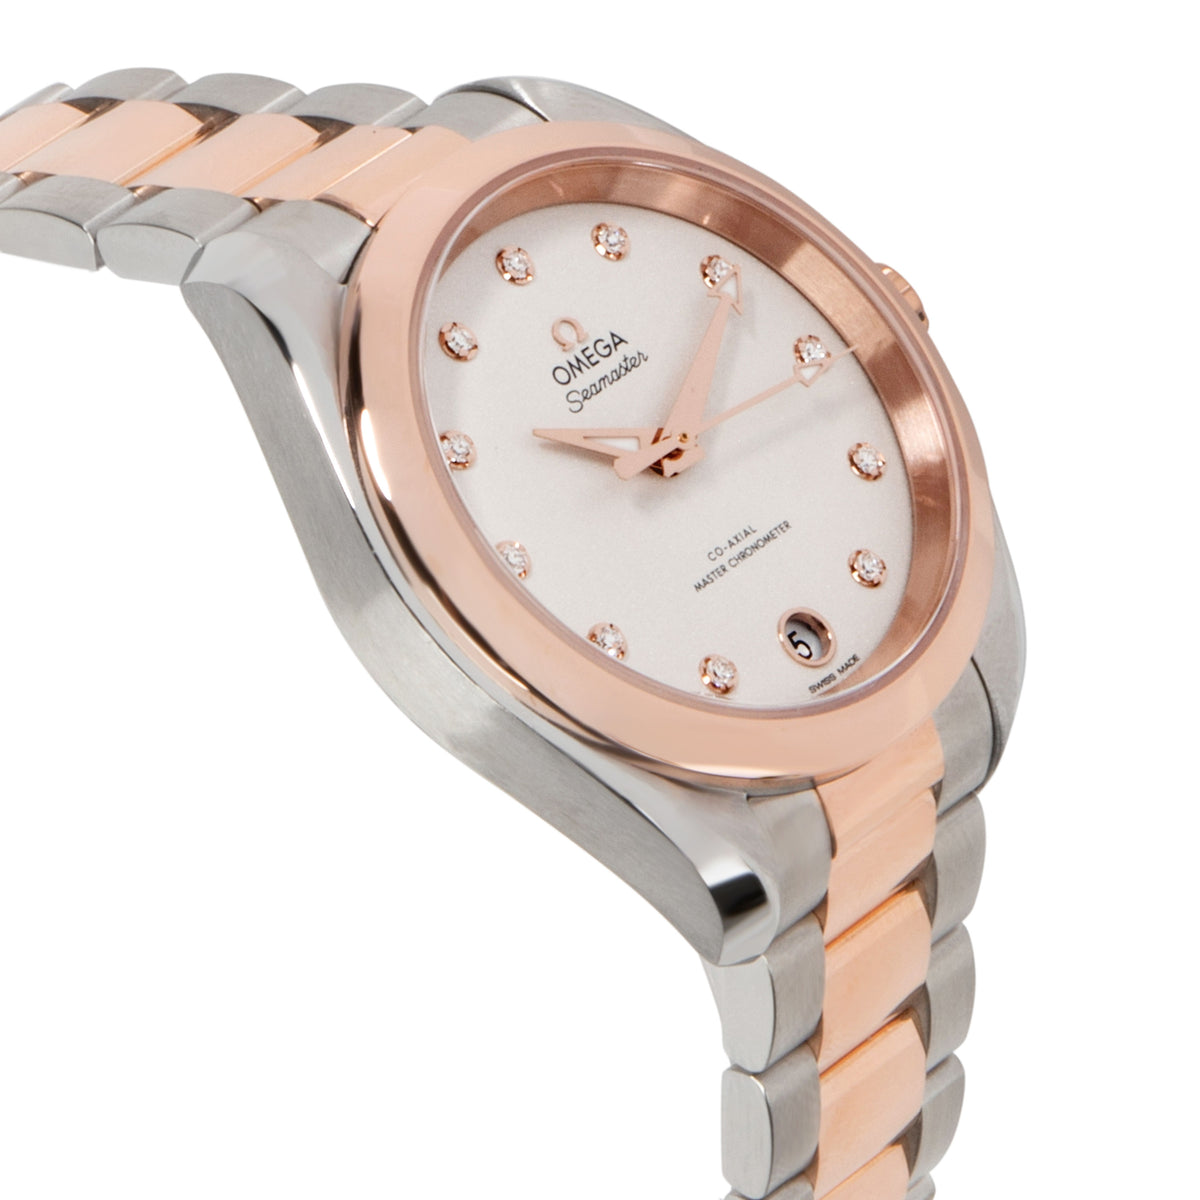 Omega Aqua Terra 150M 220.20.34.20.52.001 Unisex Watch in Rose Gold & Steel